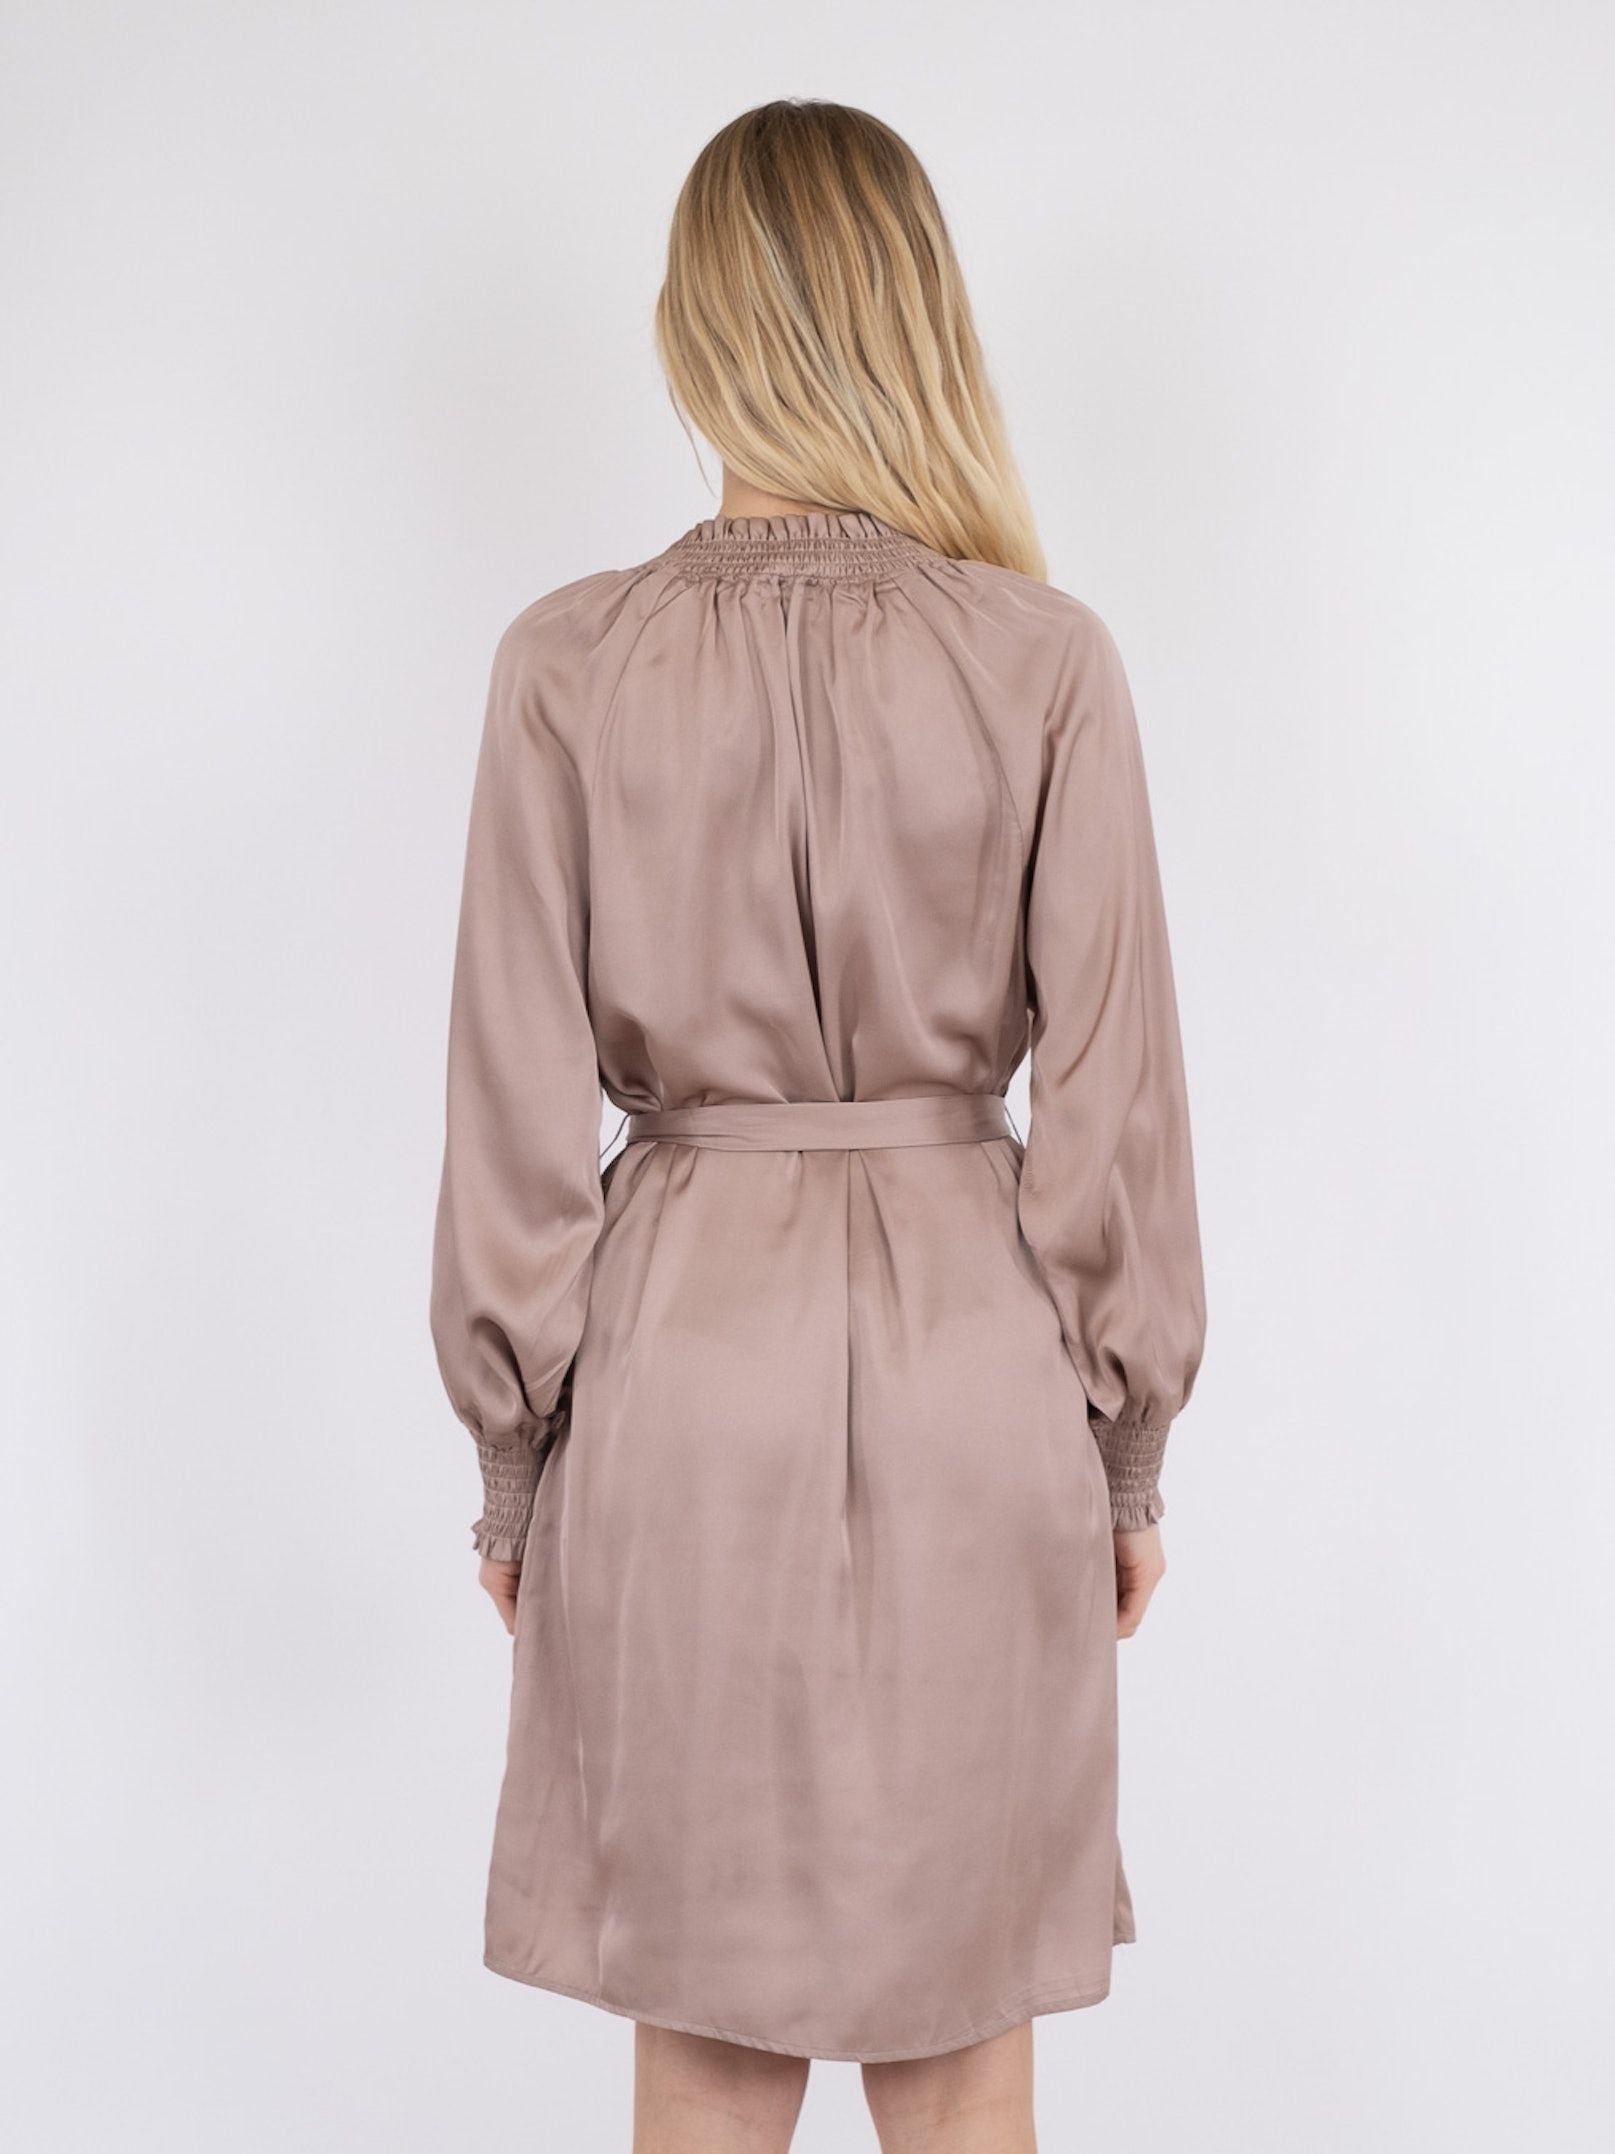 Model i kjole med bindebånd fra Neo Noir, i rosa, bagfra.